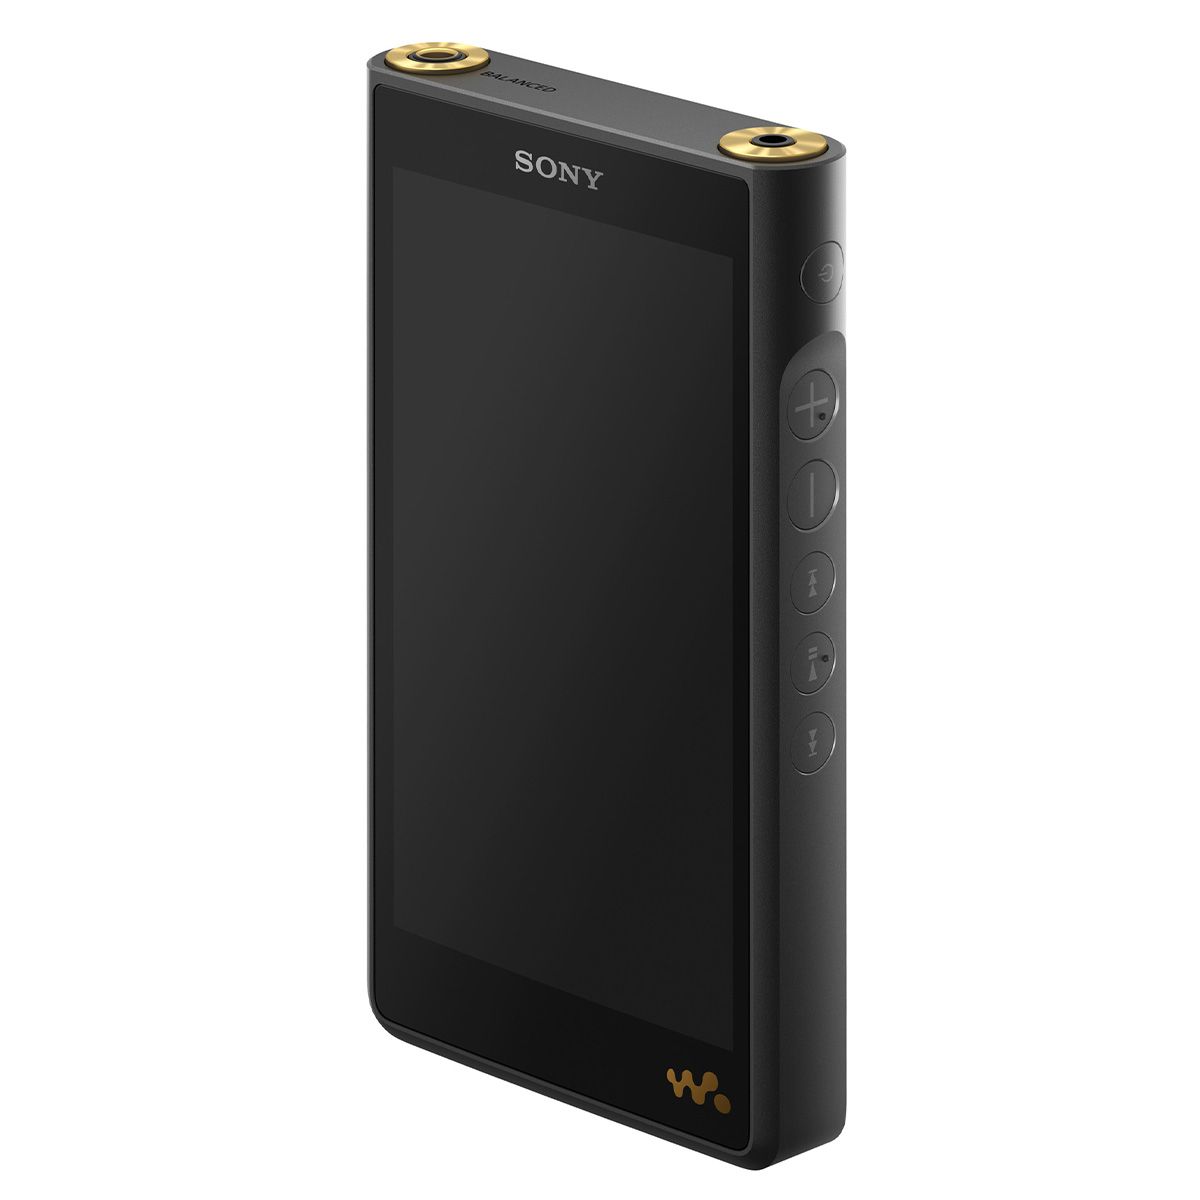 Sony WM1AM2 Walkman Digital Music Player - angled top view with blank screen